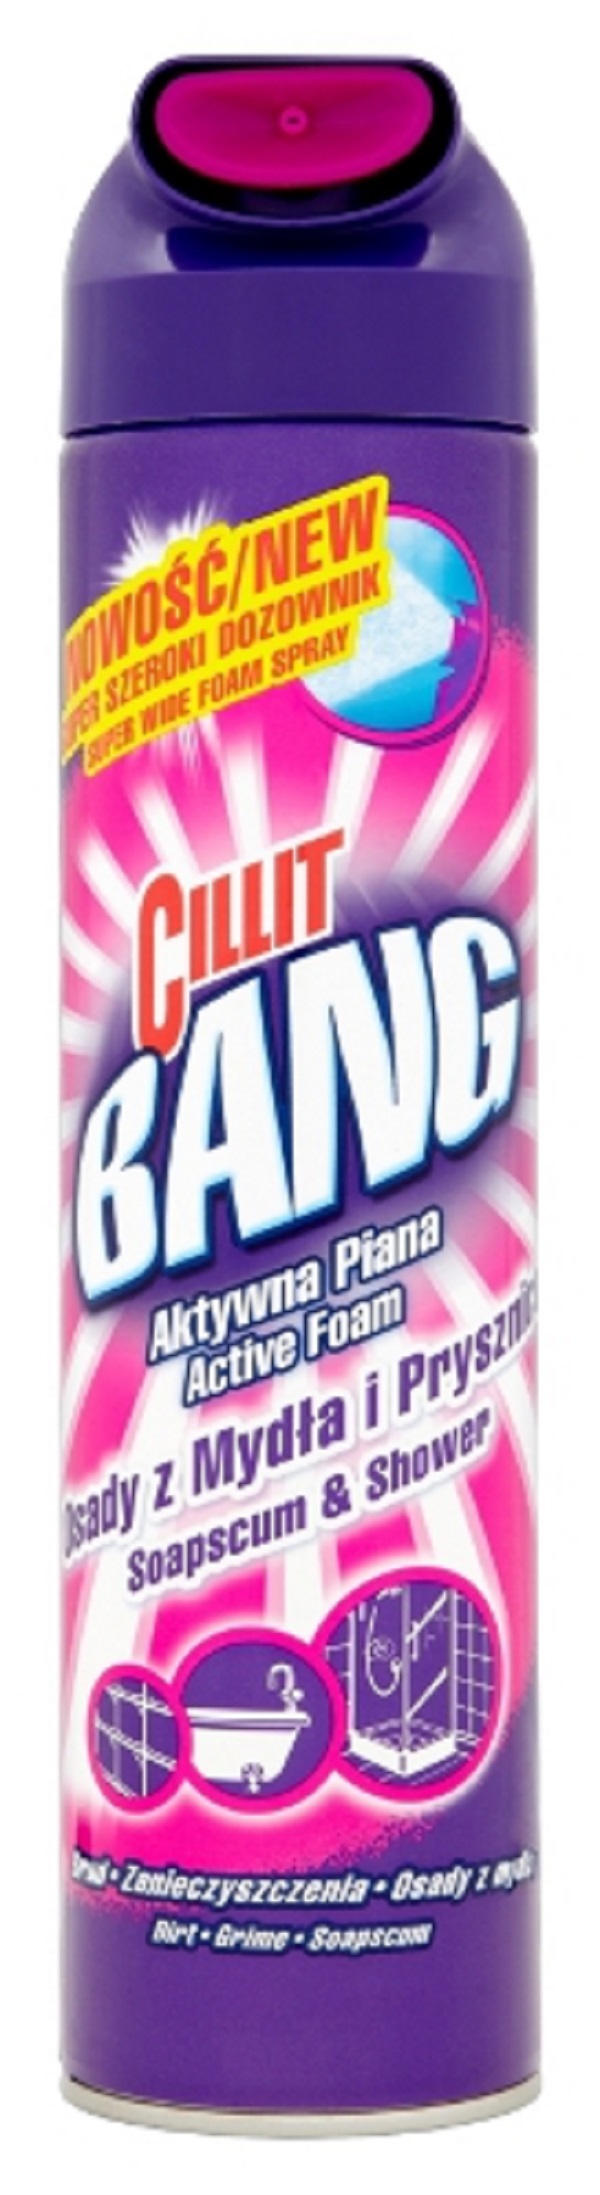 Cillit Bang aktywna piana bakterie i brud 600 ml